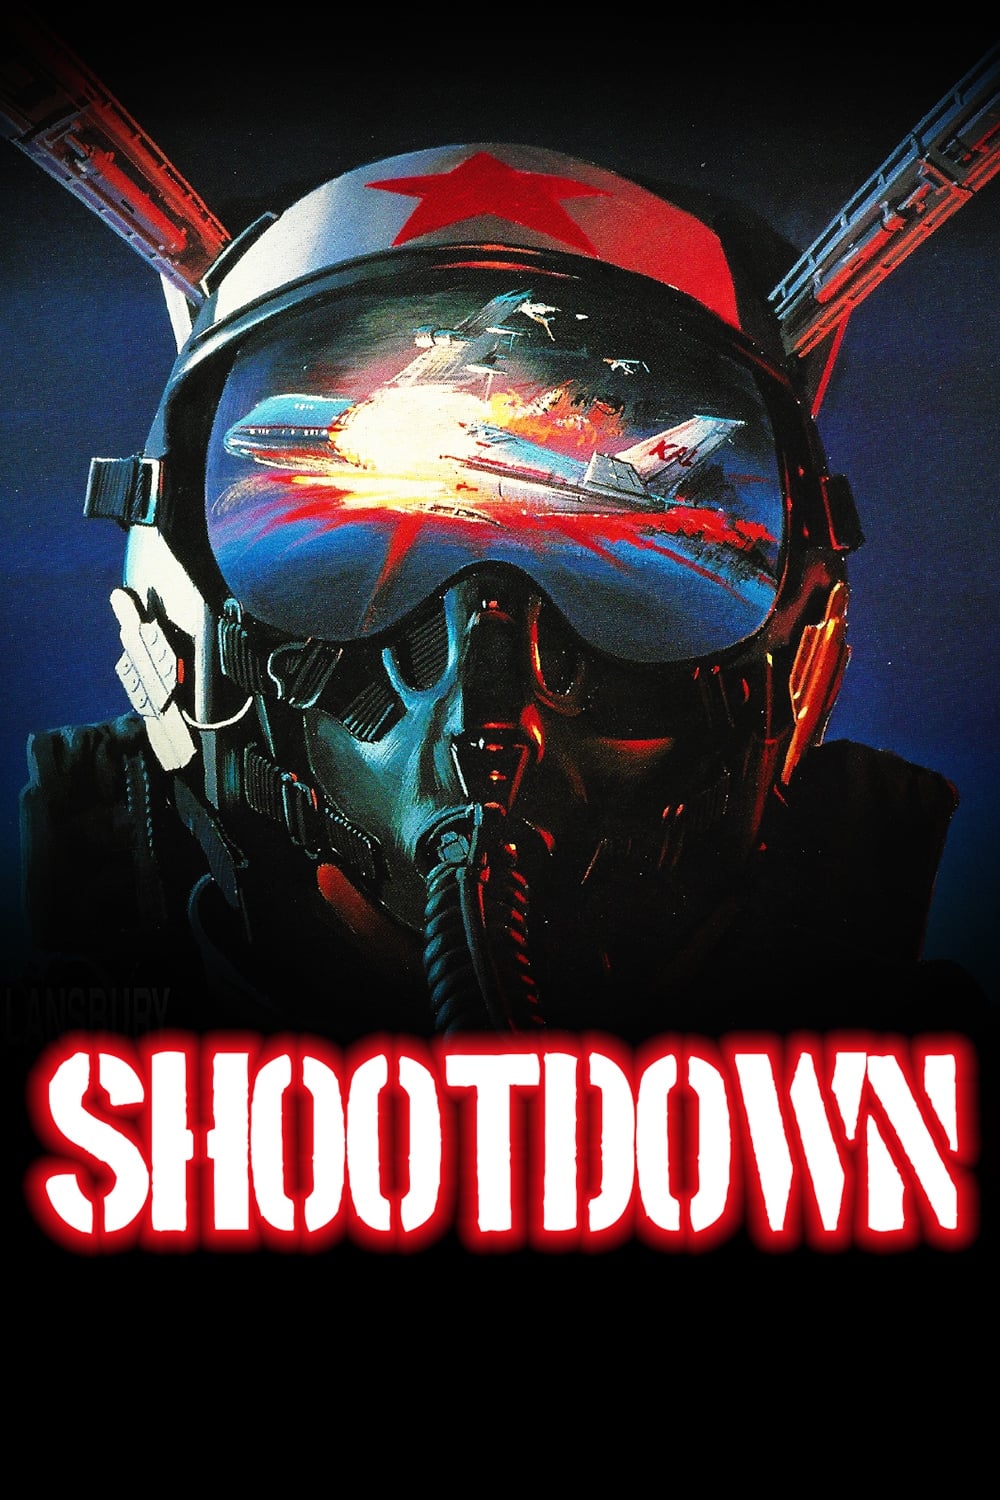 Shootdown (1988)